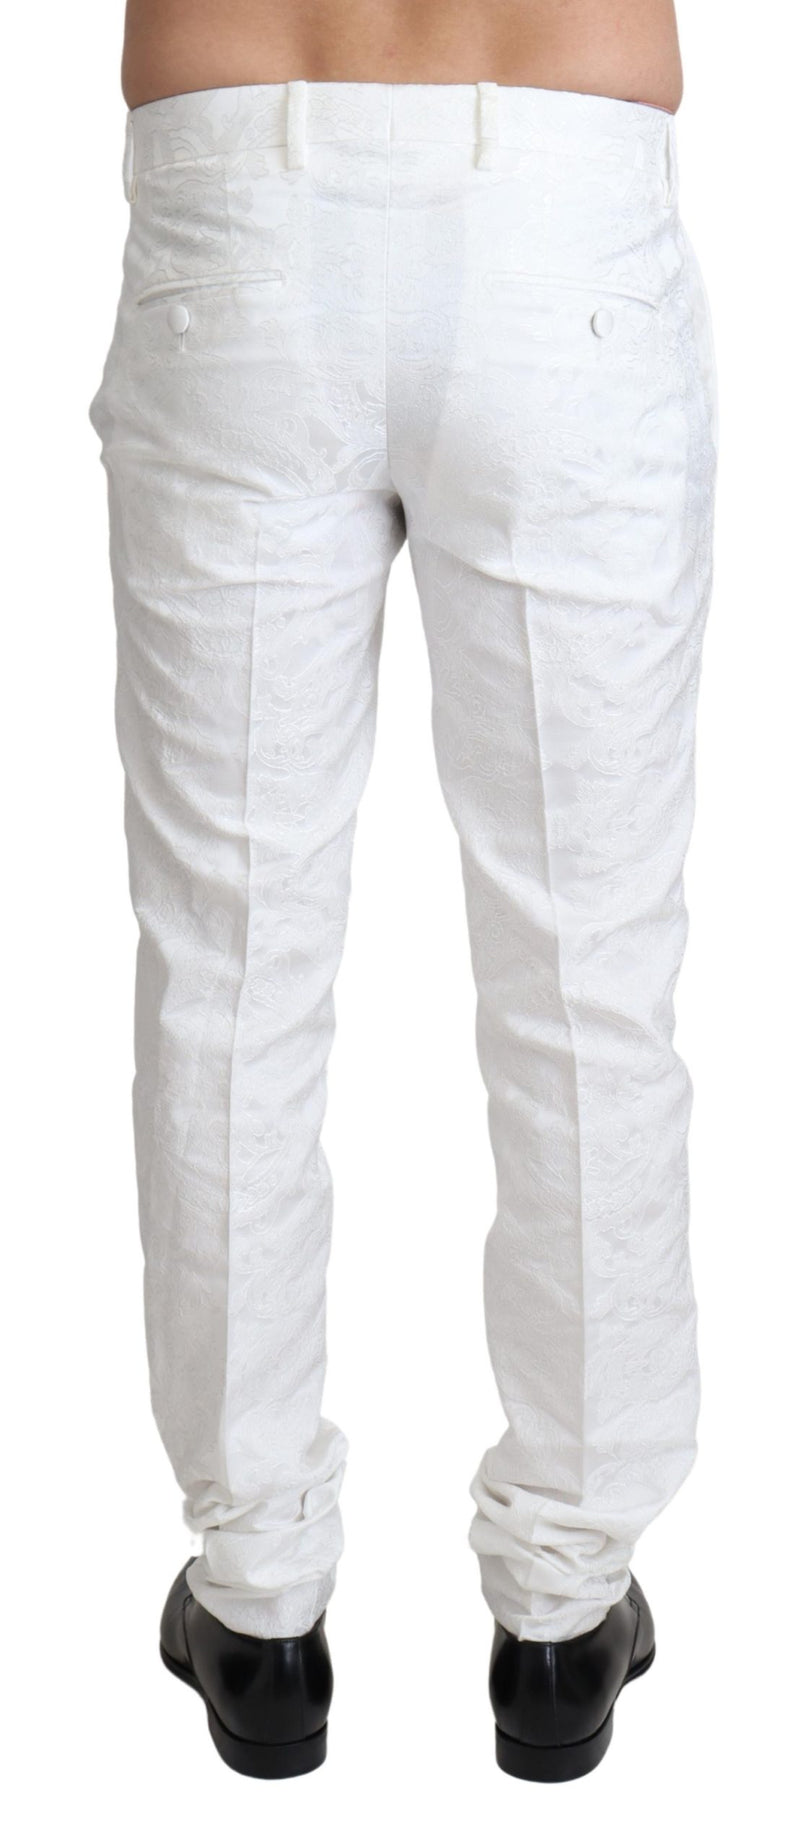 White Brocade Jaquard Dress Trouser Pants